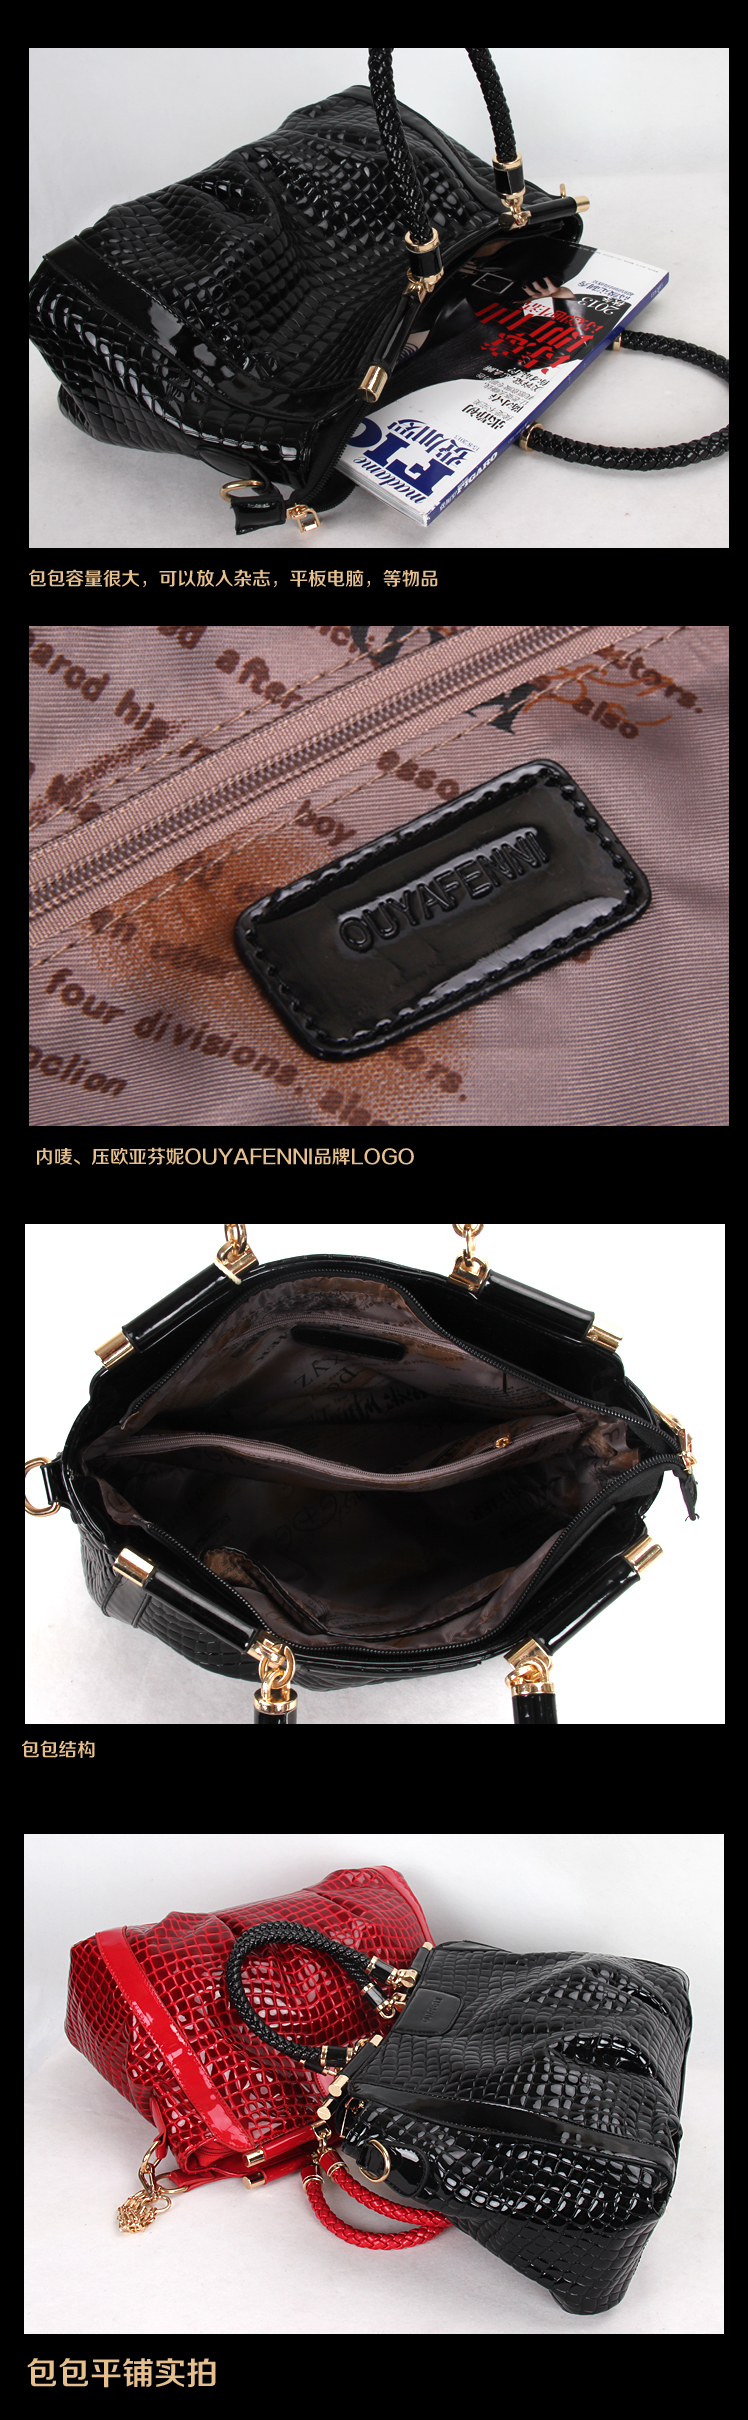 Mssefn 2014最新款 潮牛皮女包鳄鱼纹手提包真皮正品复古单肩链条包7003